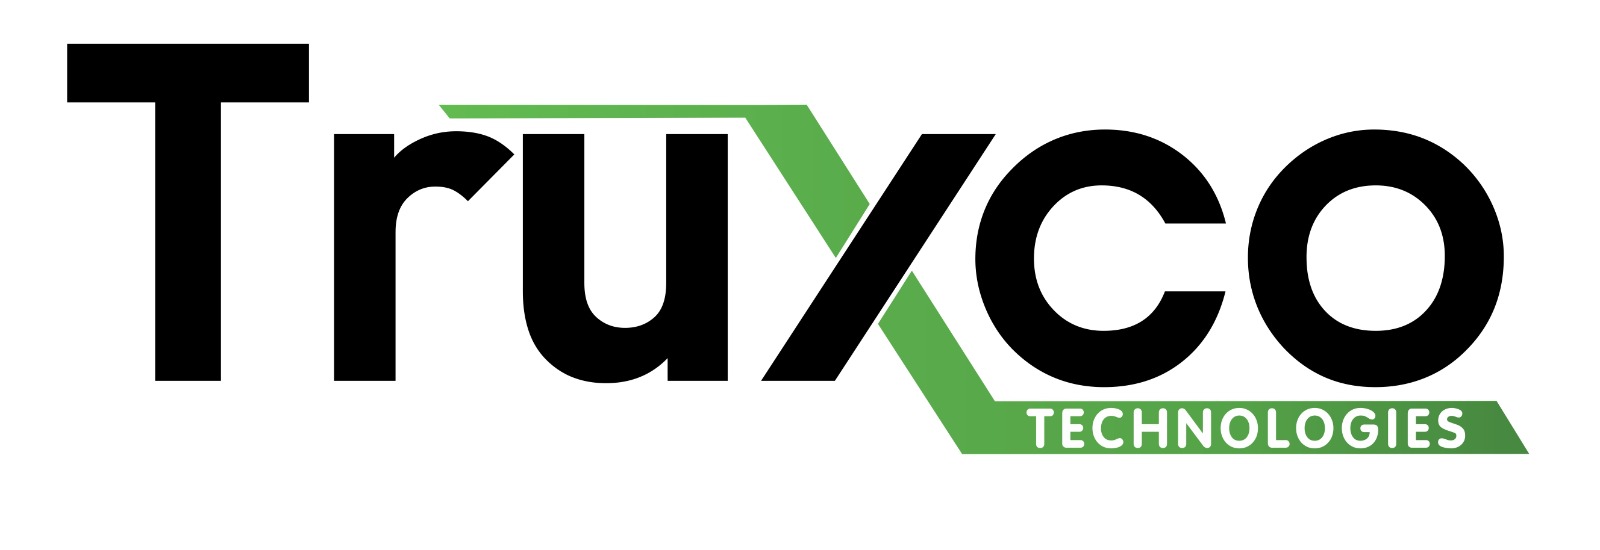 Truxco Technologies